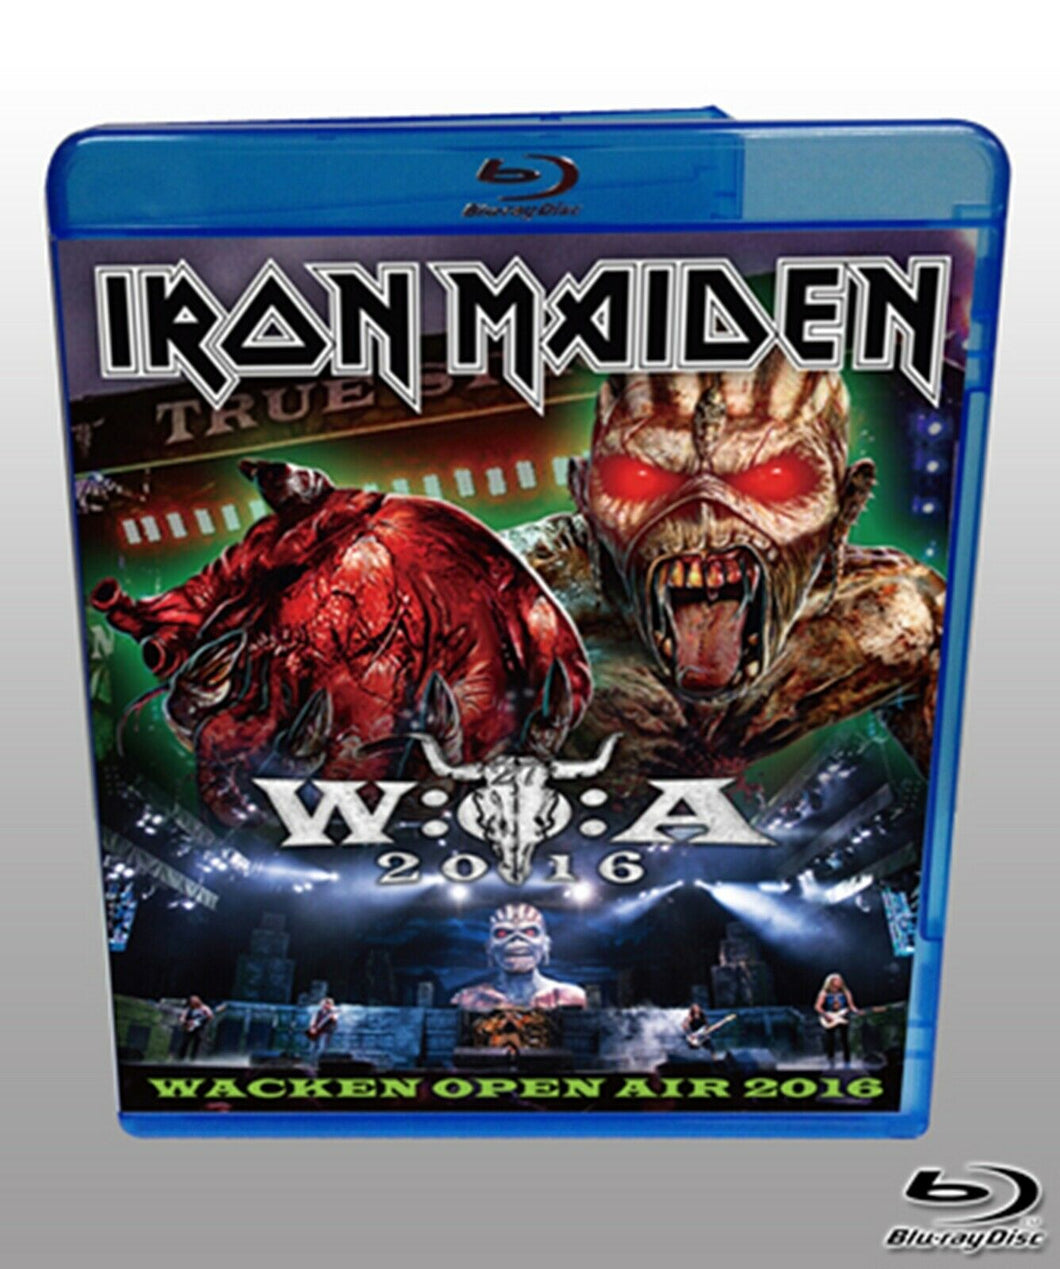 Iron Maiden Wacken Open Air 2016 Blu-ray 2 Discs 22 Tracks Heavy Metal Music F/S